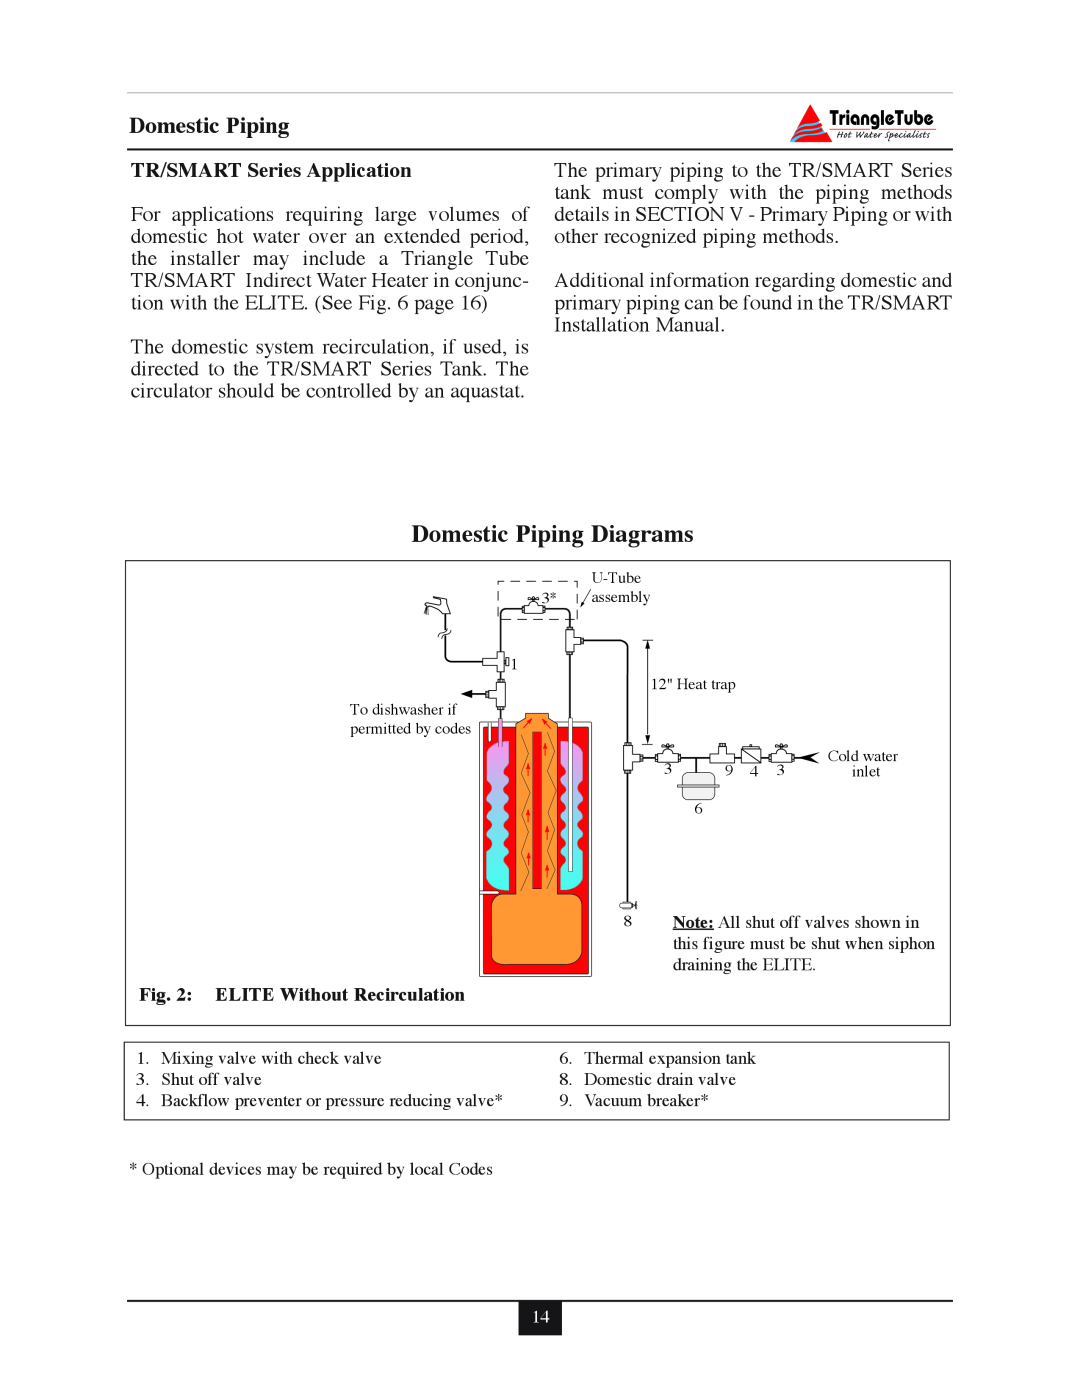 Delta 40, F-25, 35, 30, 45 warranty Domestic Piping Diagrams, TR/SMART Series Application 